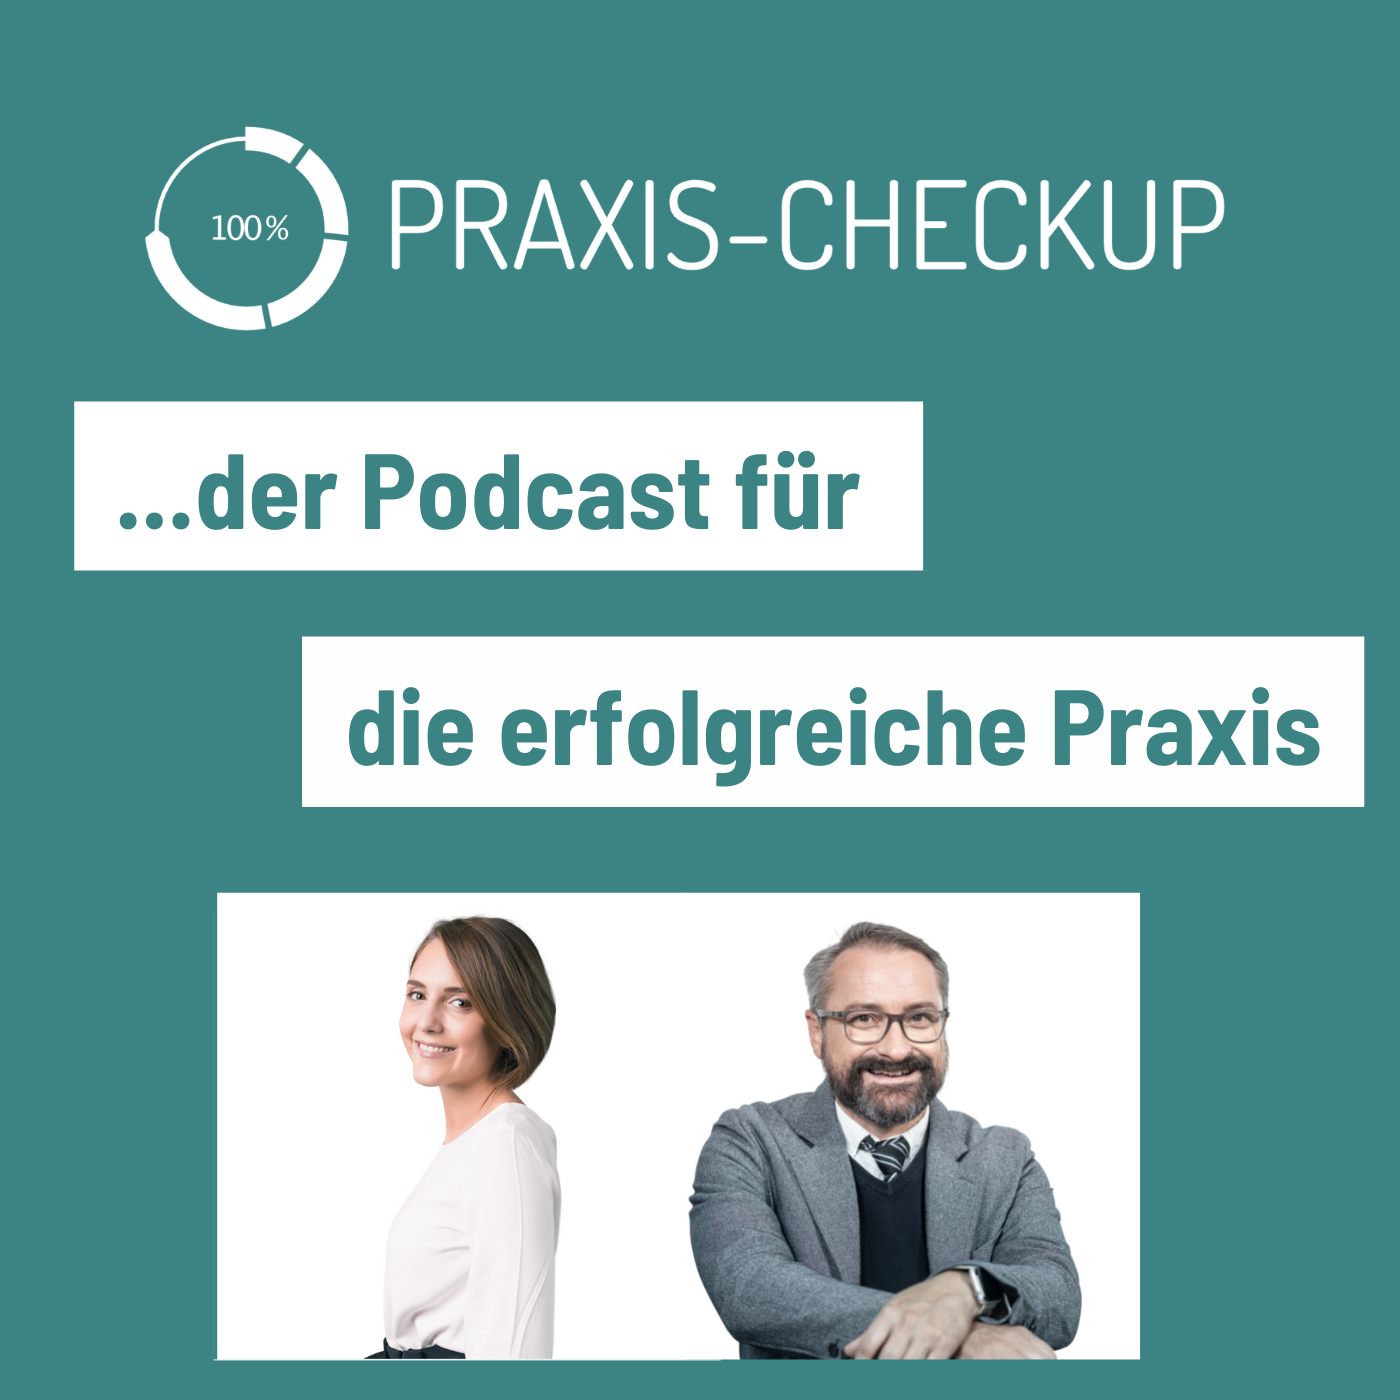 PRAXIS-CHECKUP